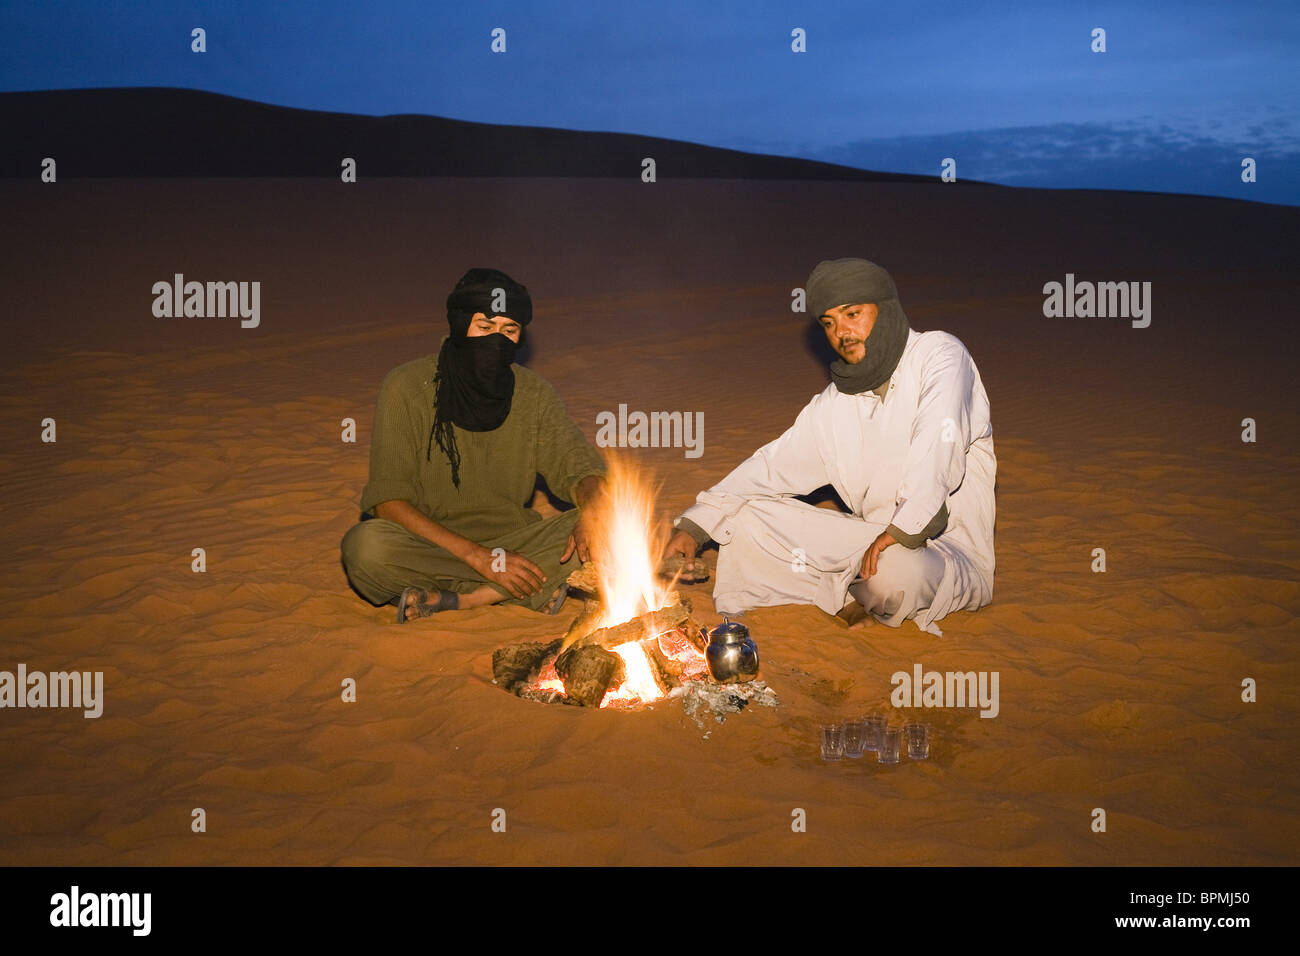 tuaregs preparing tea at campfire, Libya, Africa Stock Photo